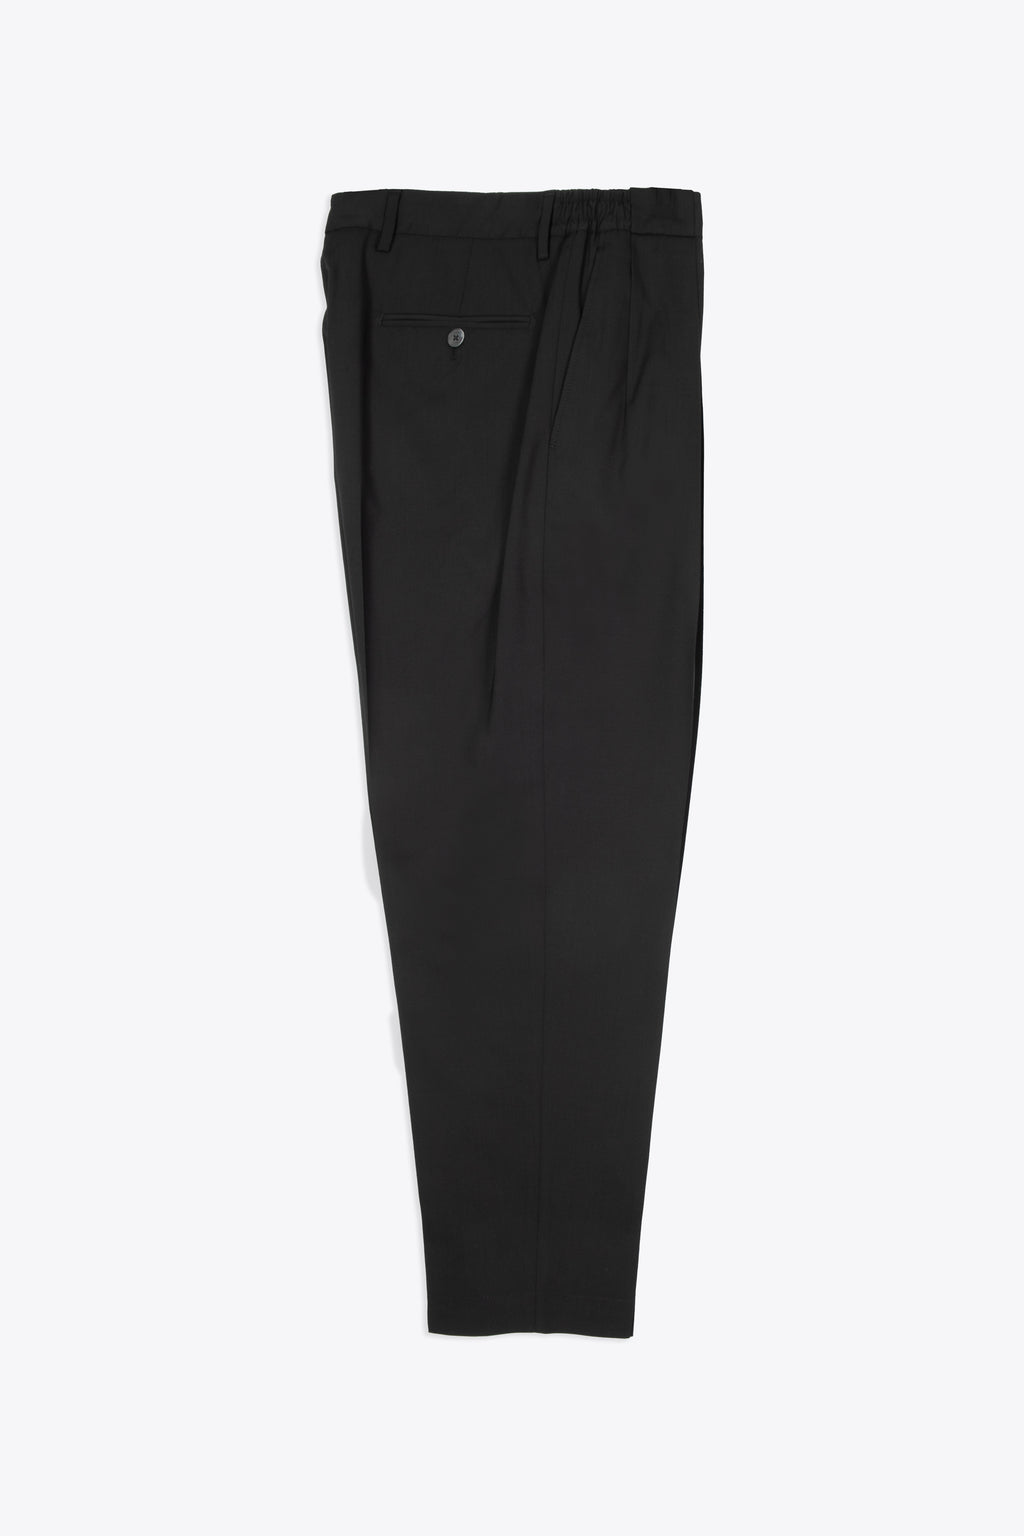 alt-image__Black-tailored-wool-pleated-cropped-pant---Portobellos